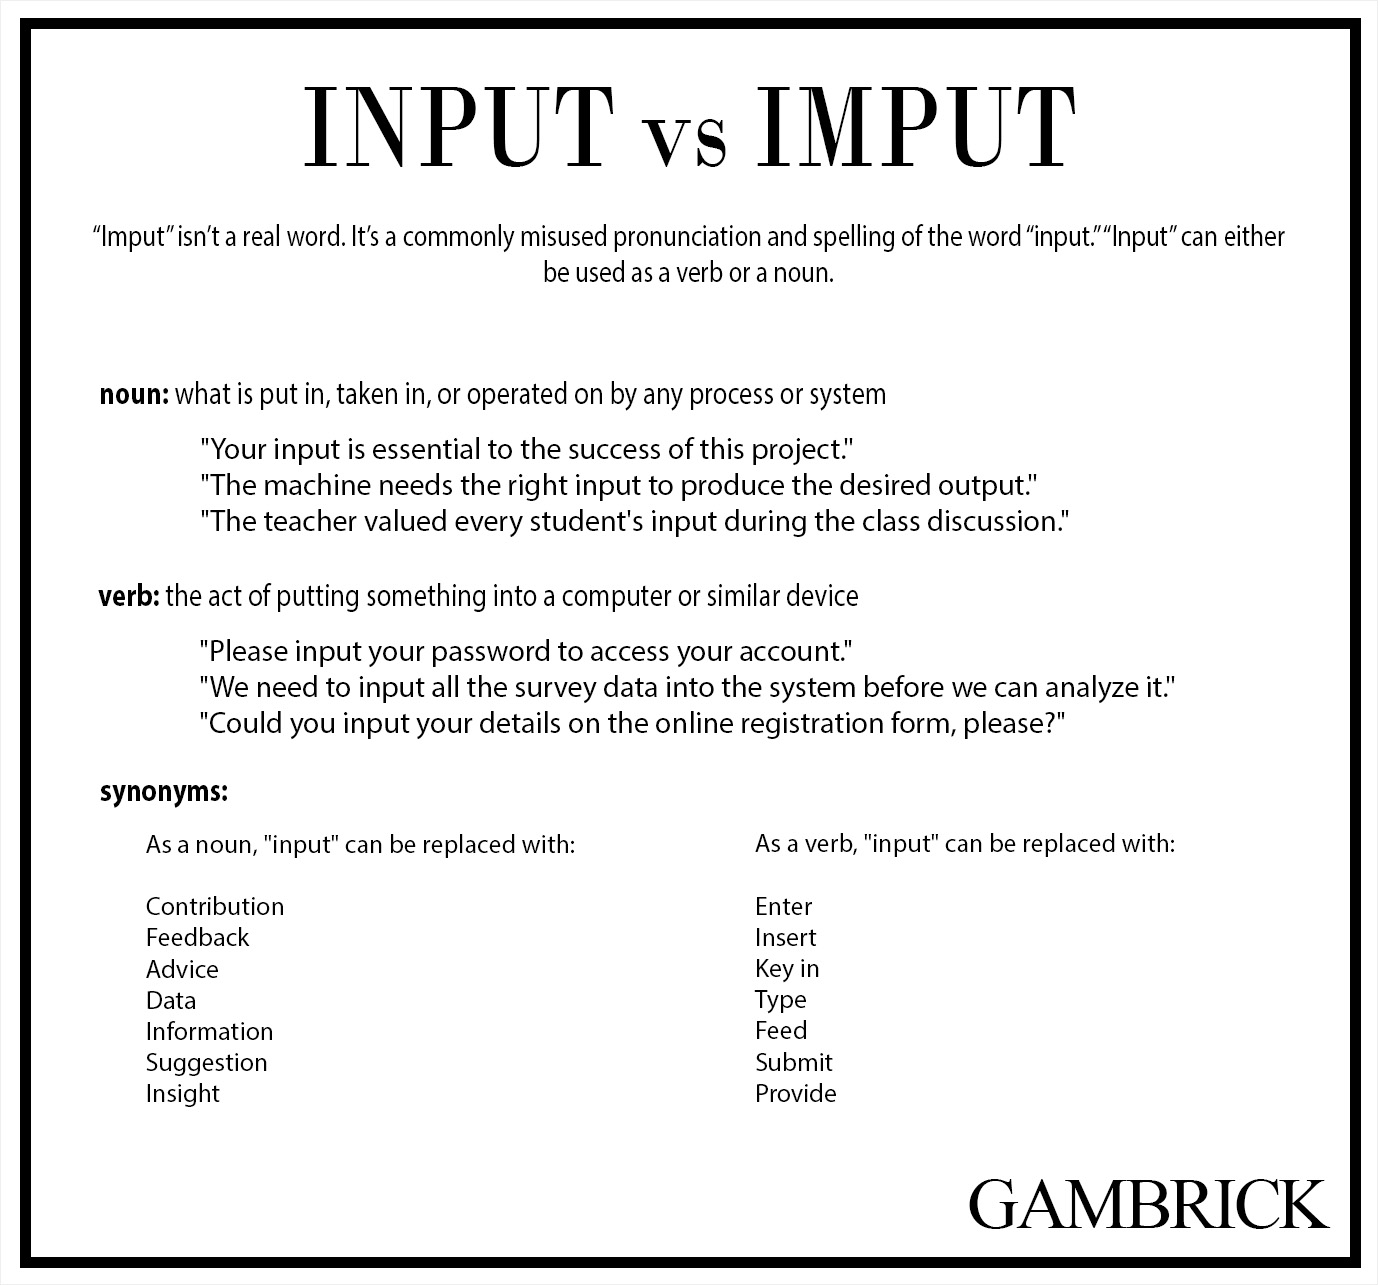 input vs imput chart 1.0